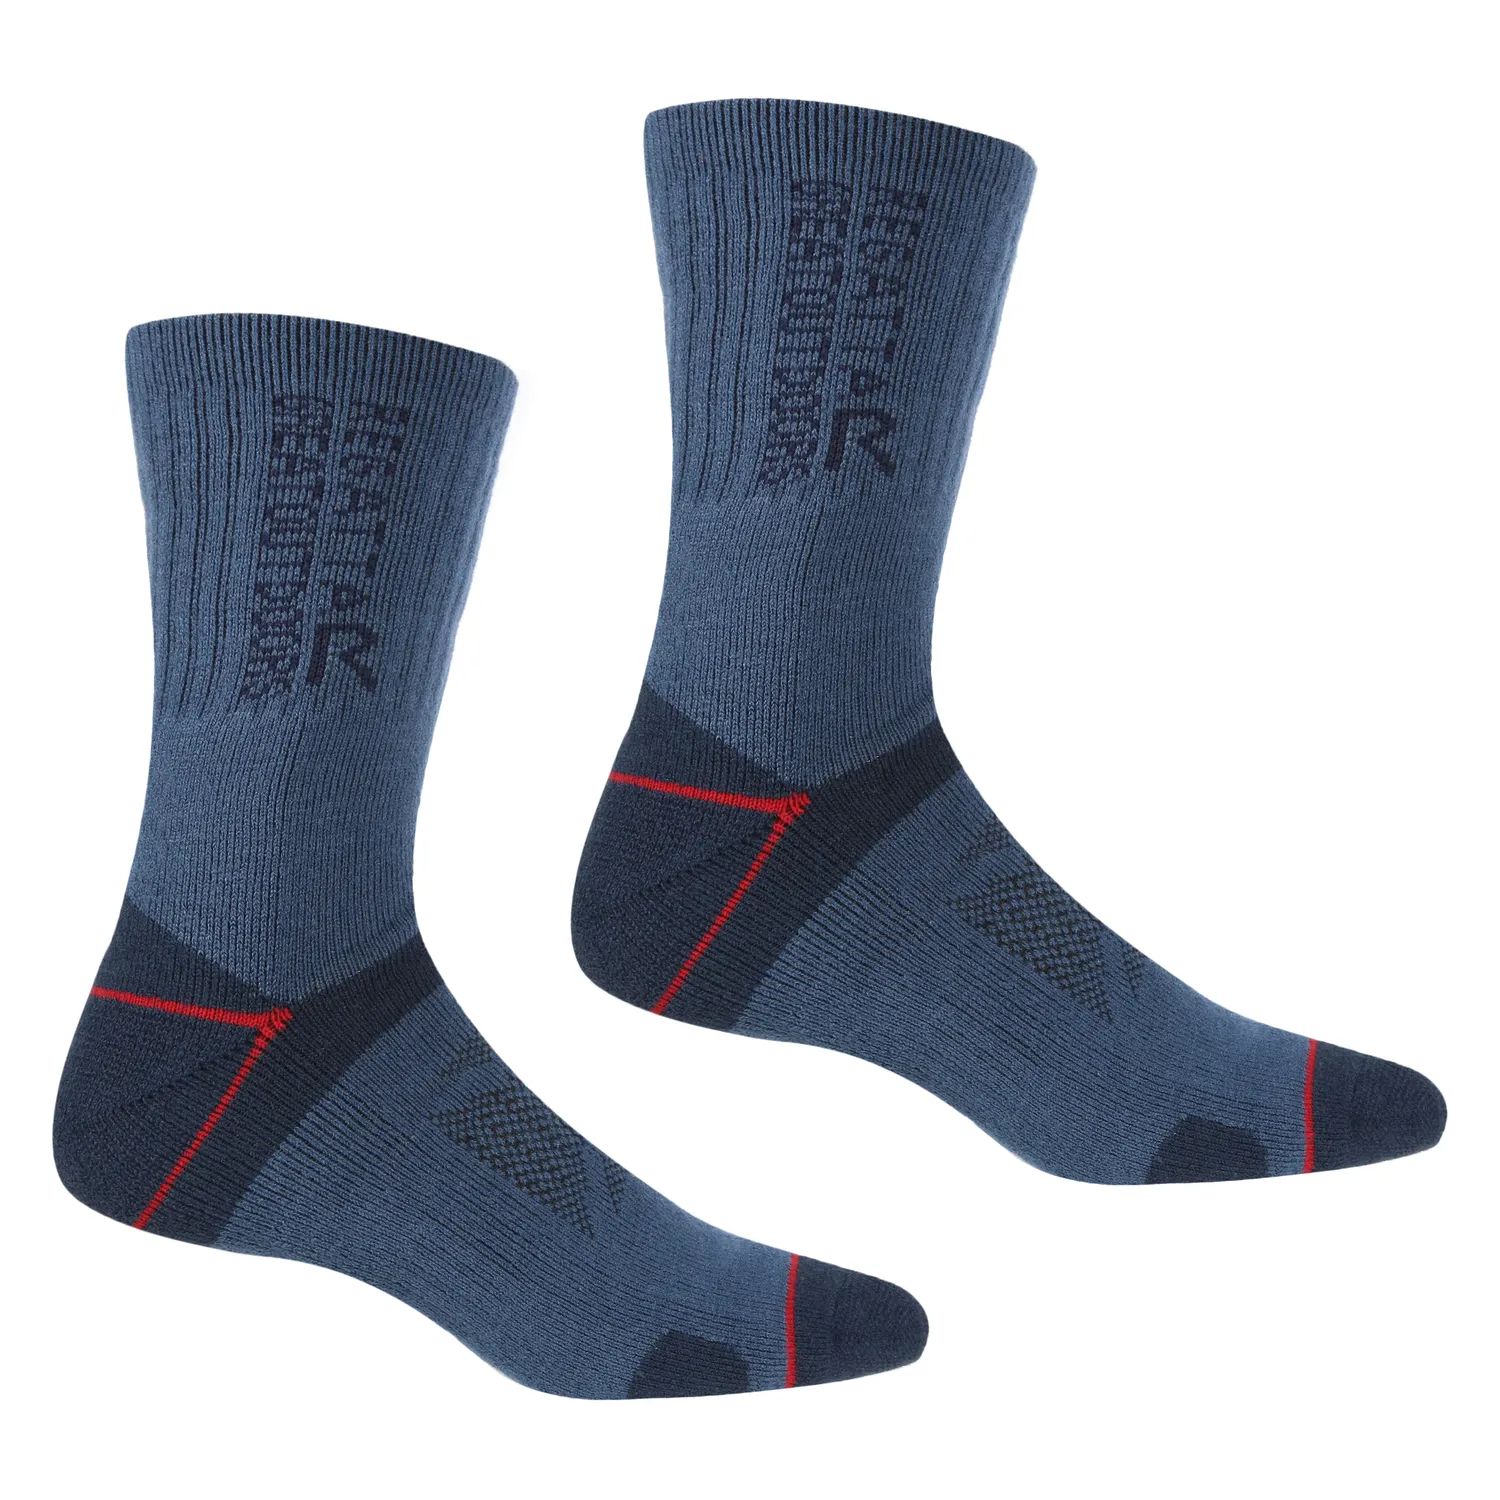 Regatta Blister Protect II Walking Socks (Dark Denim/Dark Red)